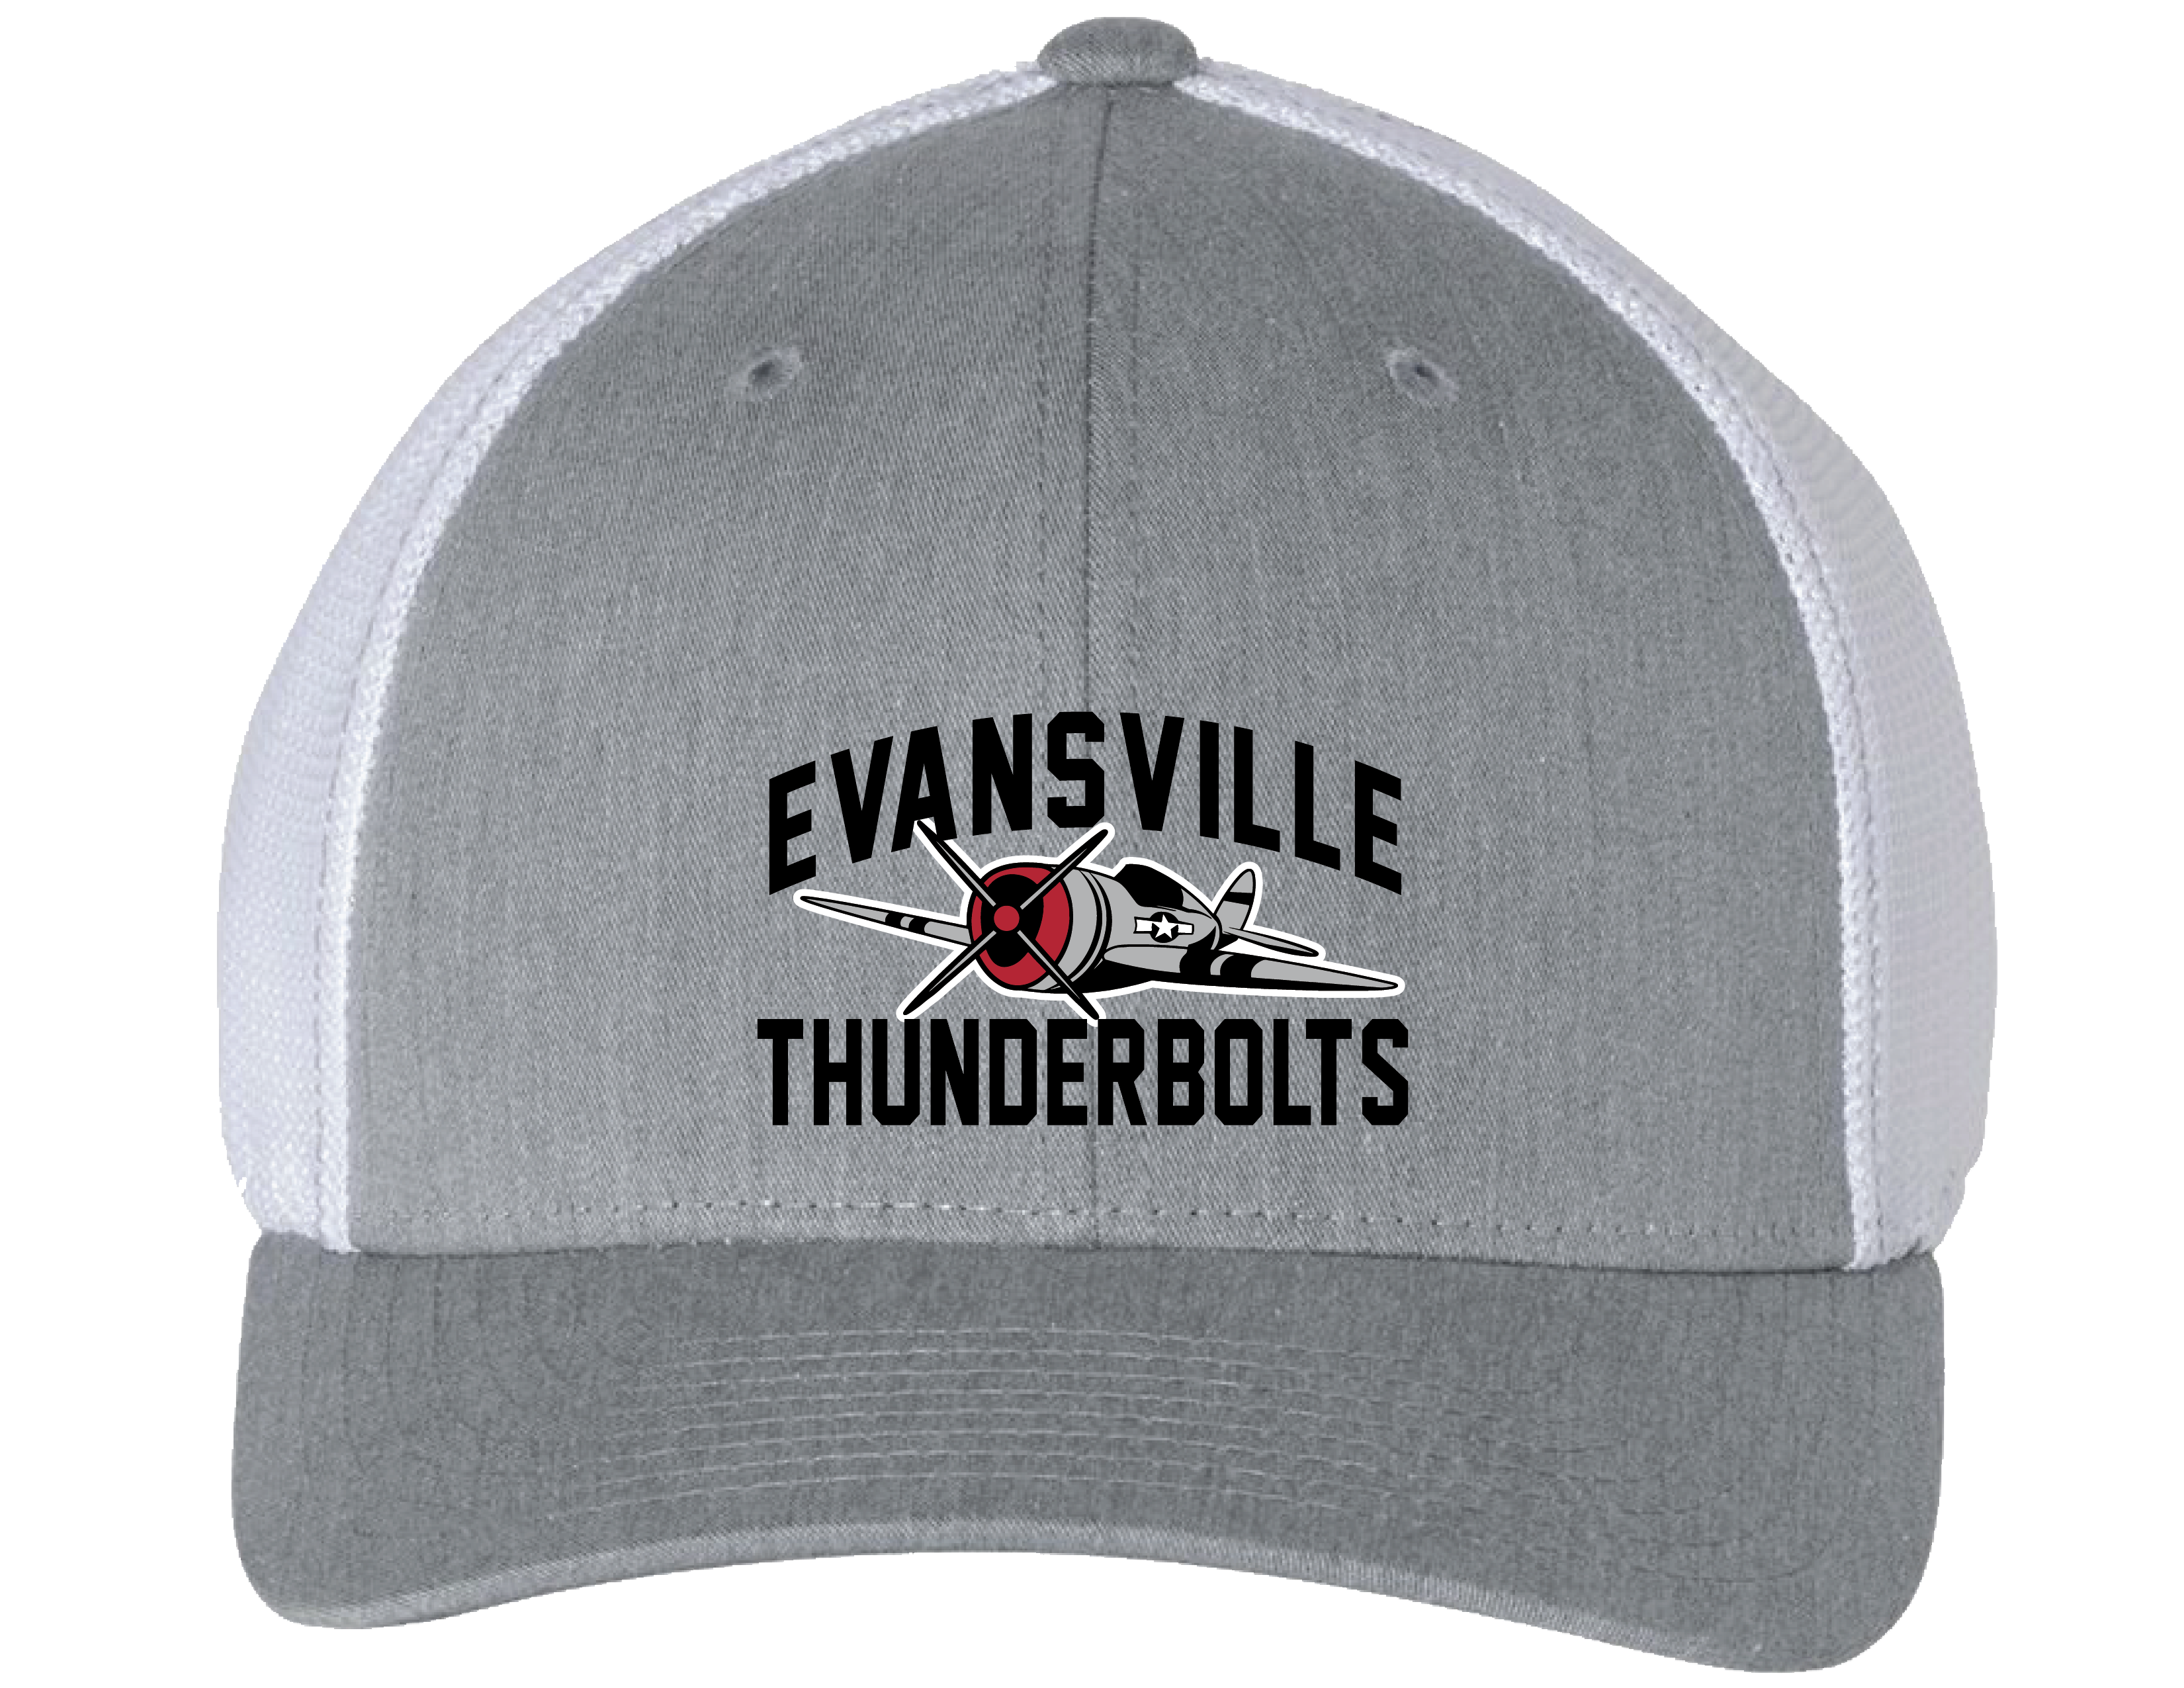 Evansville Thunderbolts Ball Cap